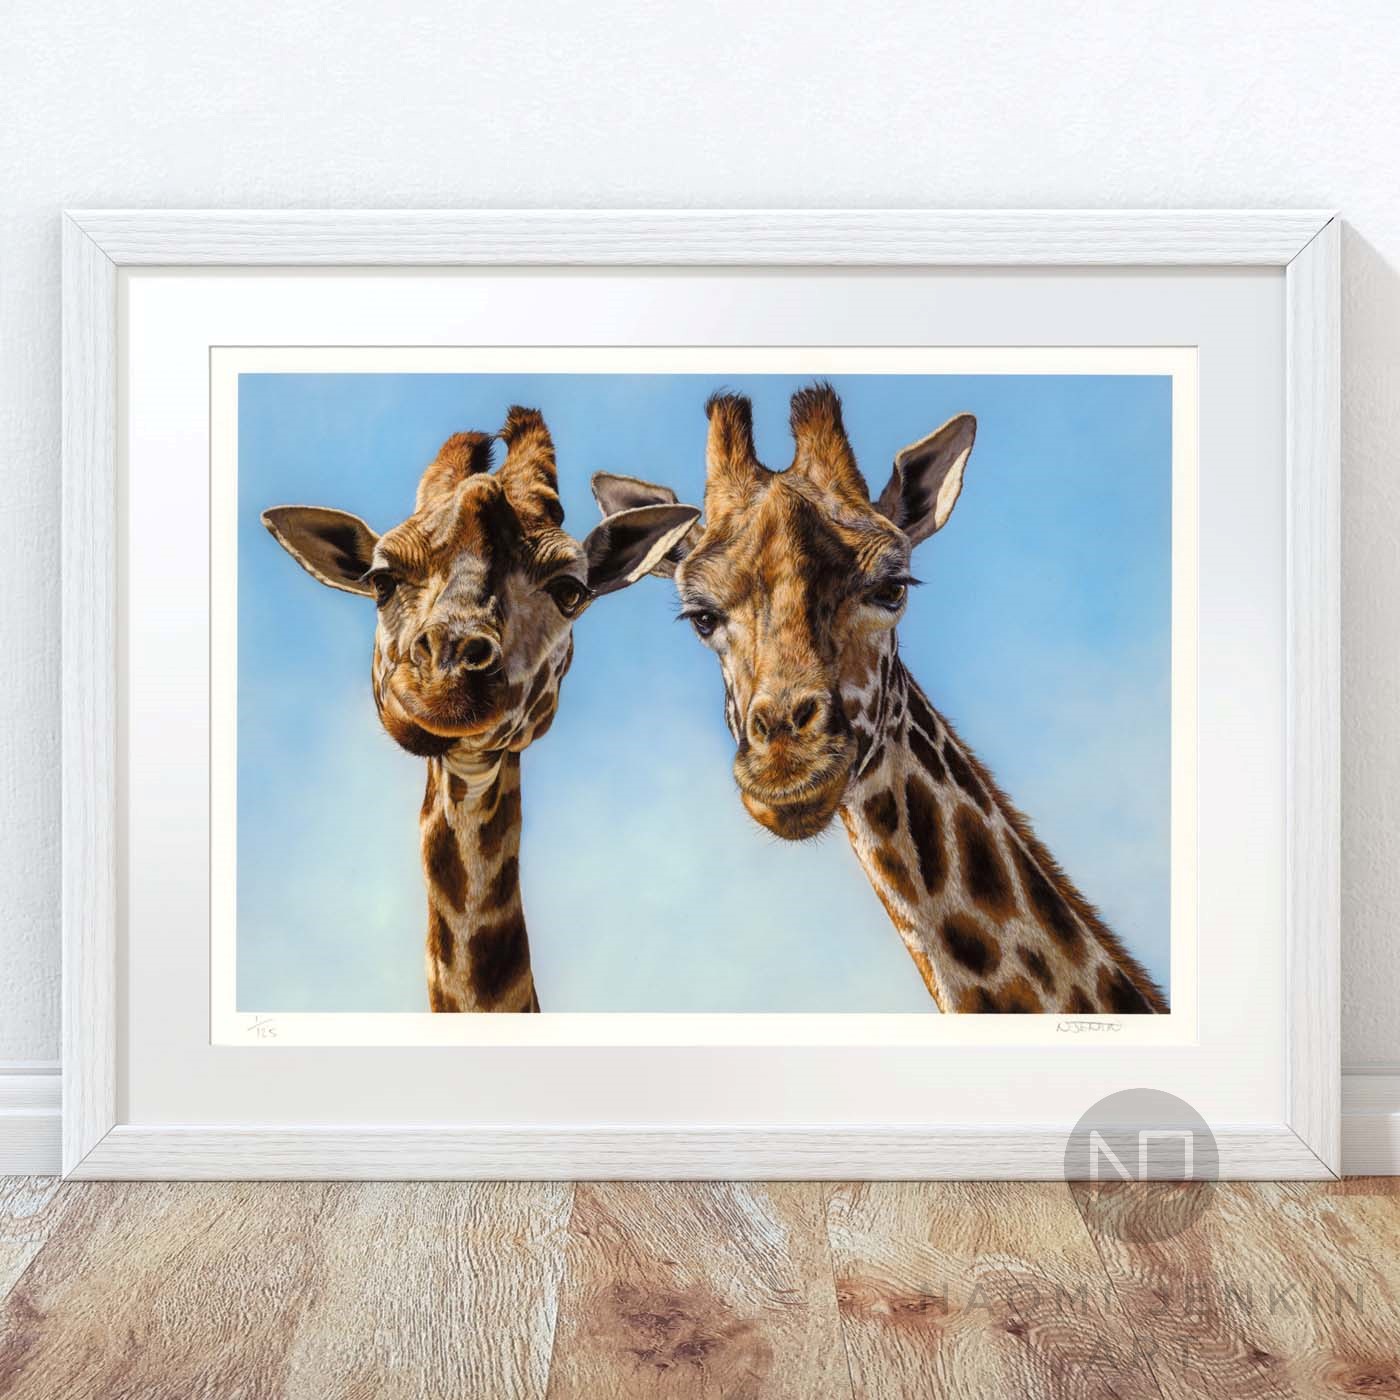 Framed giclee print of a giraffe painting by wildlife artist Naomi Jenkin.